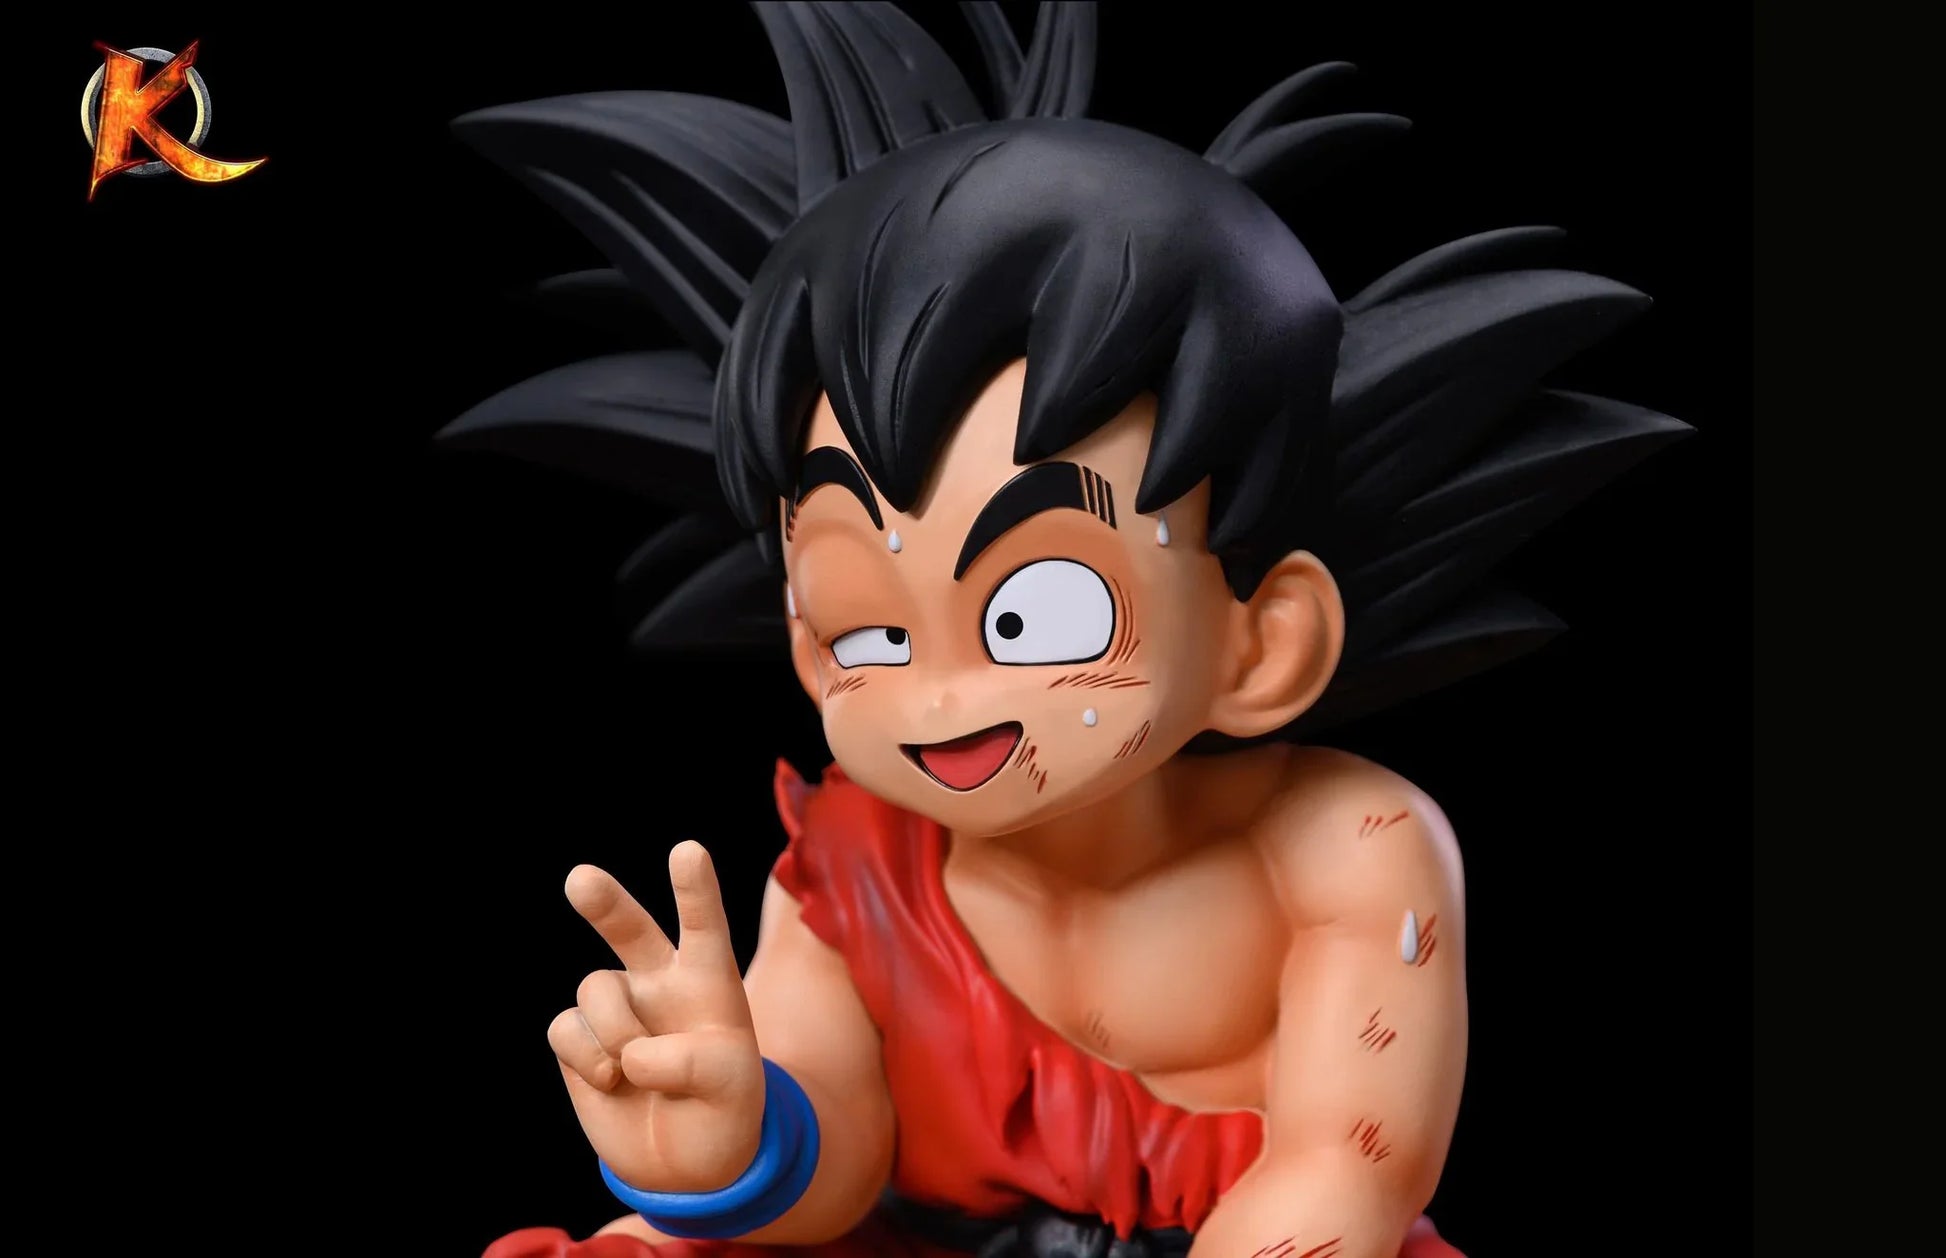 King - Kid Goku StatueCorp